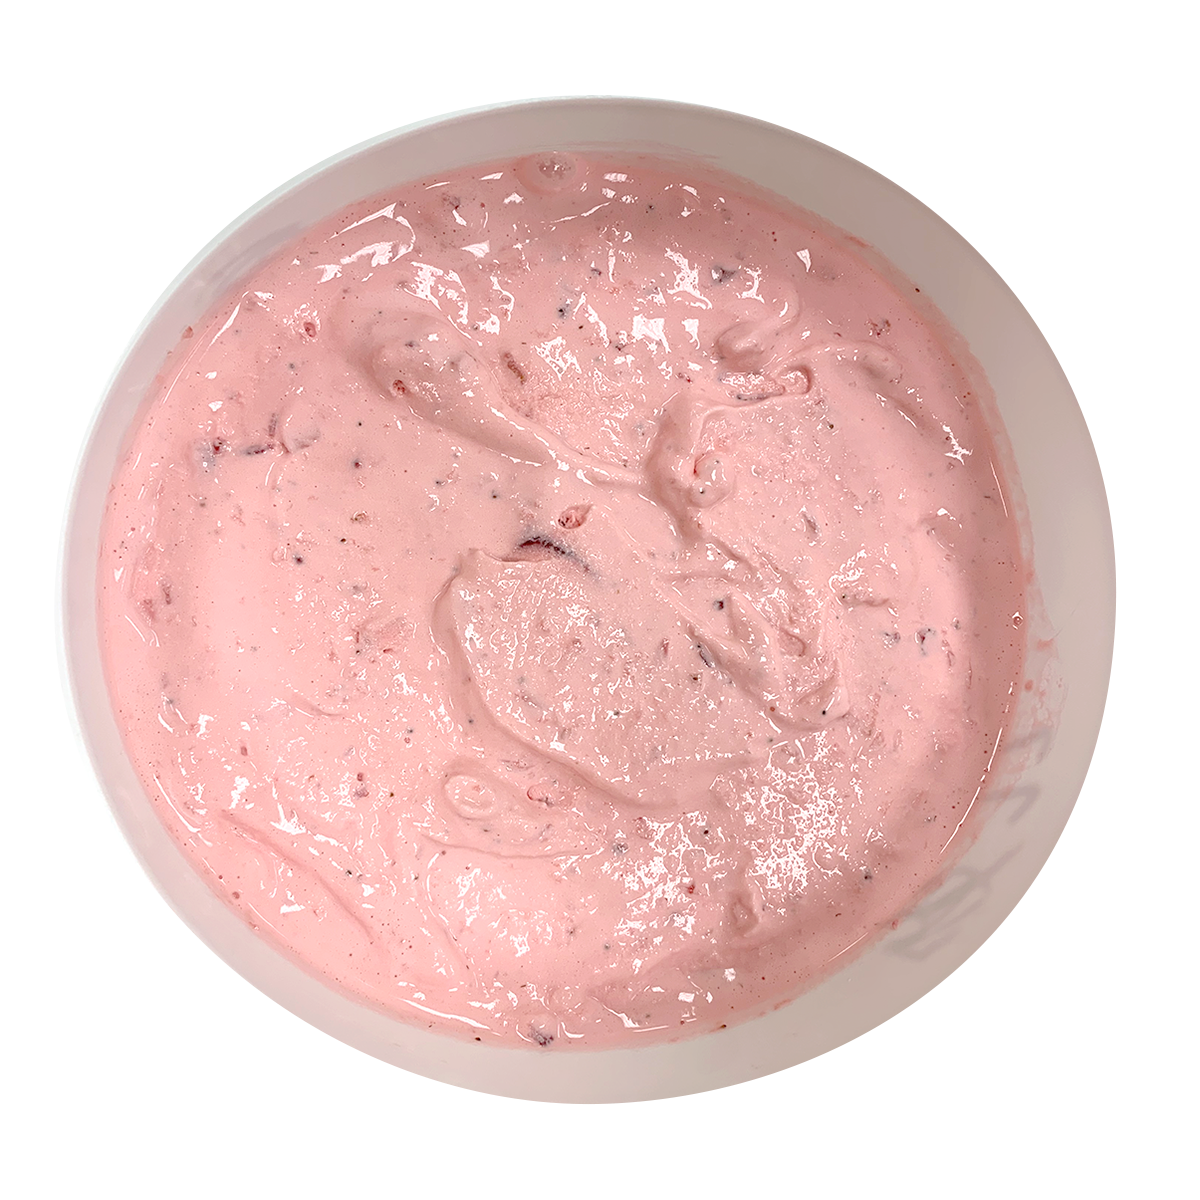 Homemade Ice Cream Menu - Strawberry Ice Cream - Helado de Fresa | Happy Sun Ice Cream